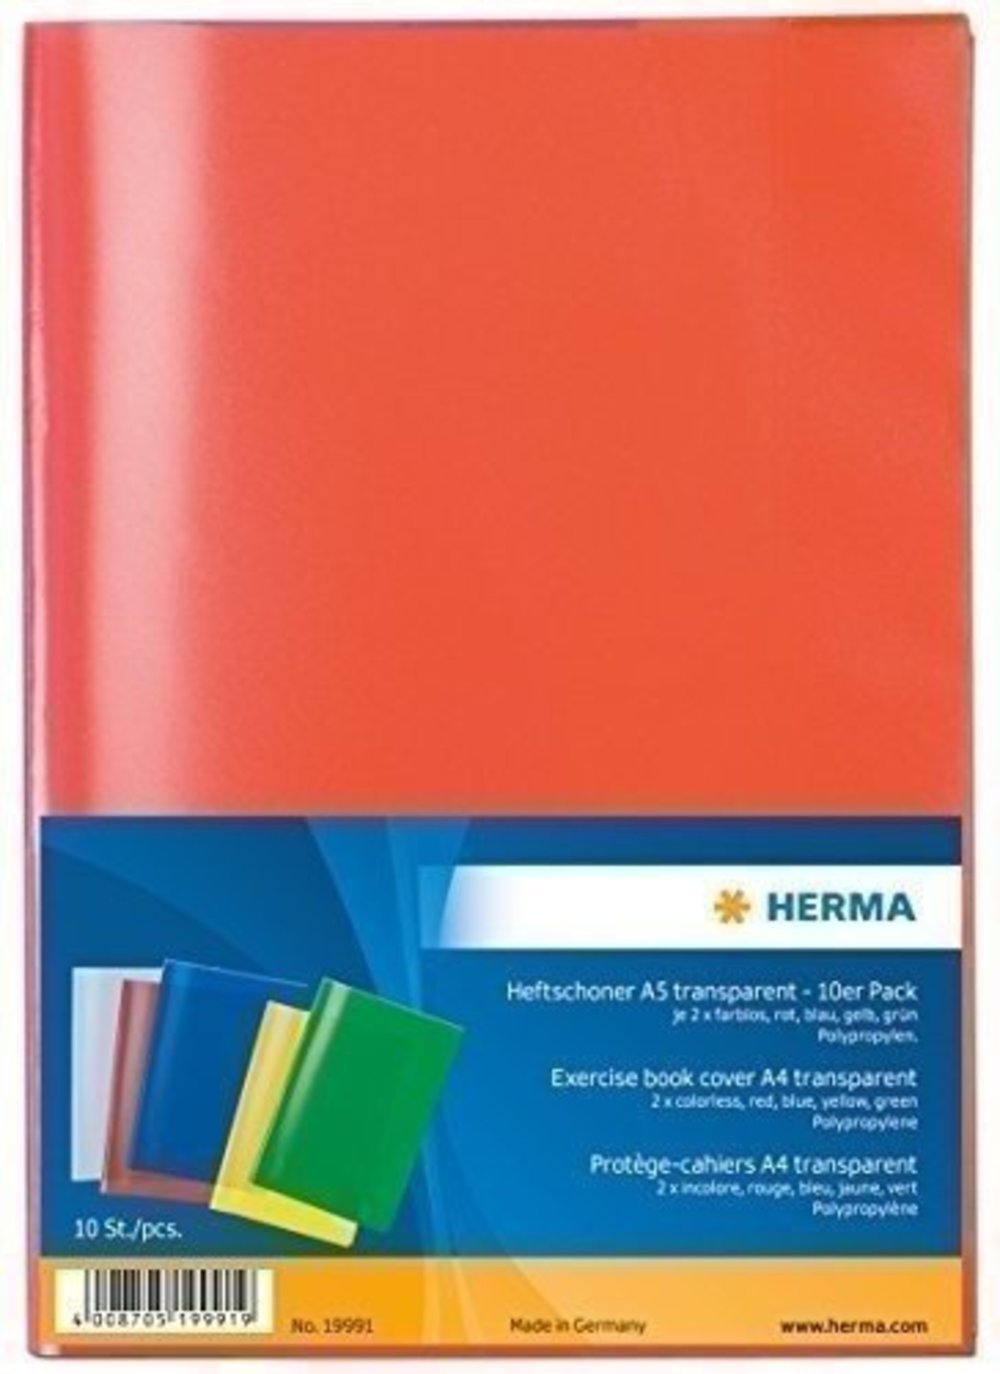 HERMA Heftschoner Sortiment A5 transparent (5 Farben) 10St.